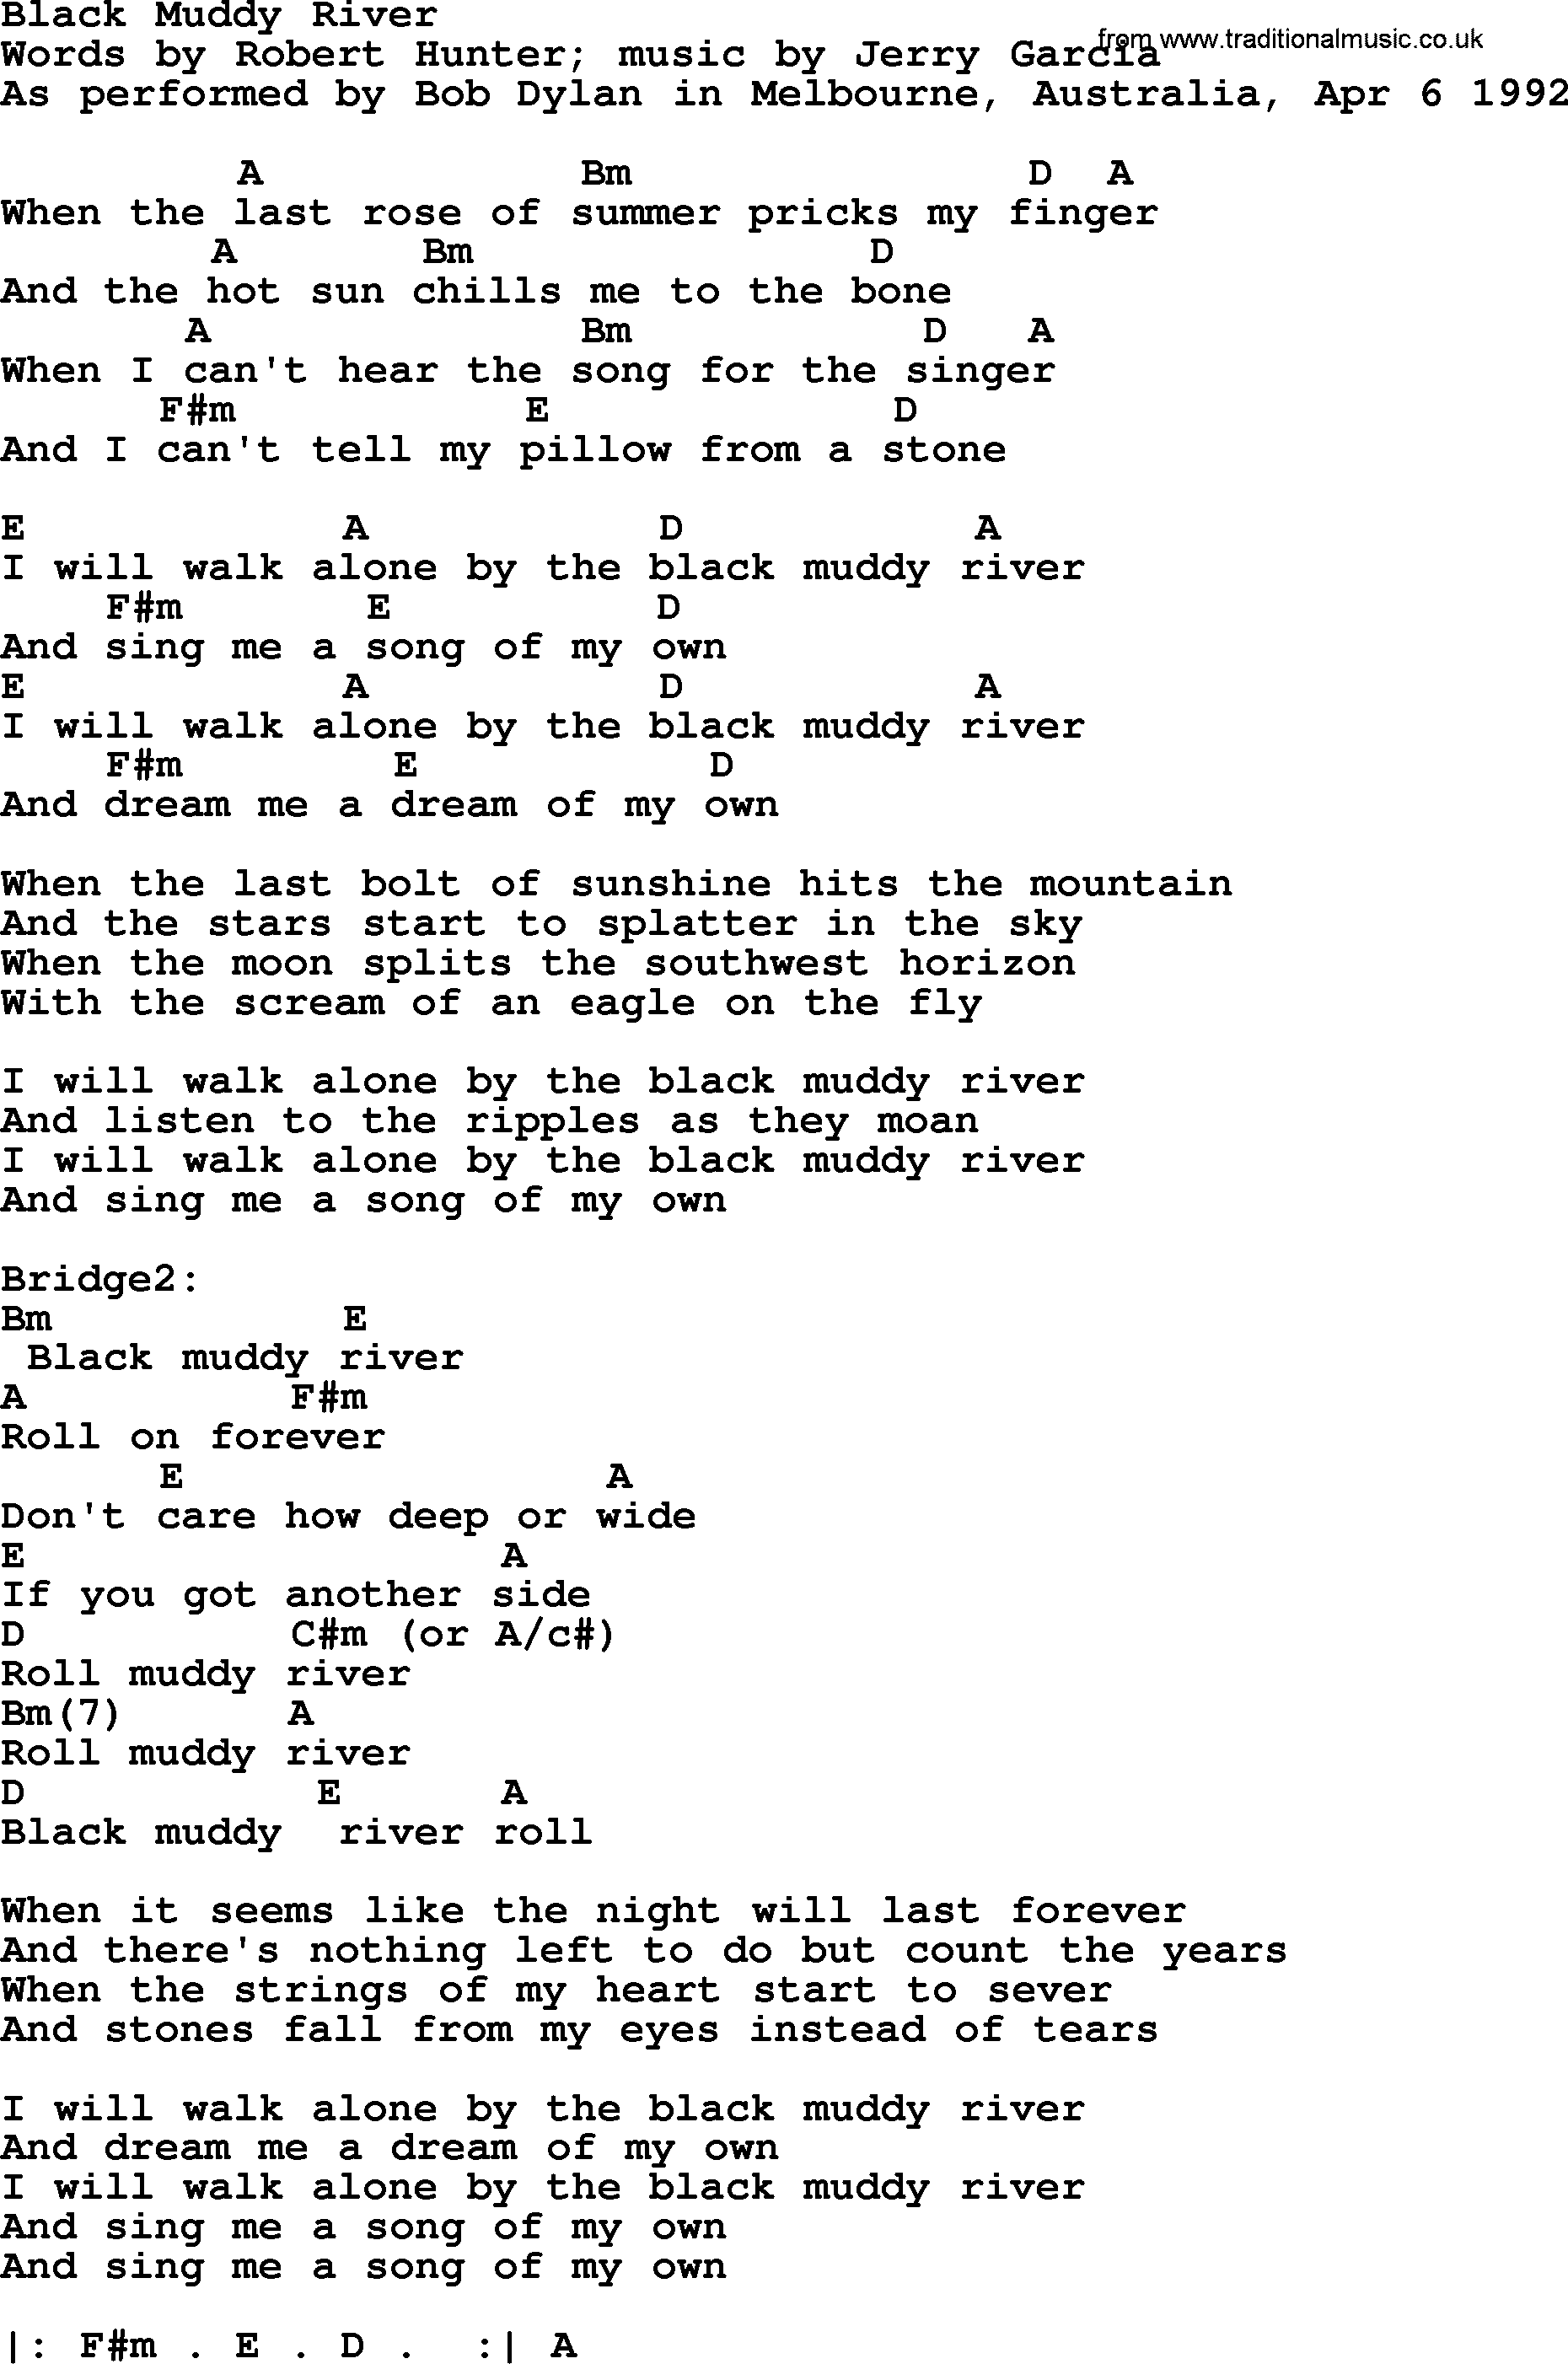 Bob Dylan song - Black Muddy River, lyrics and chords